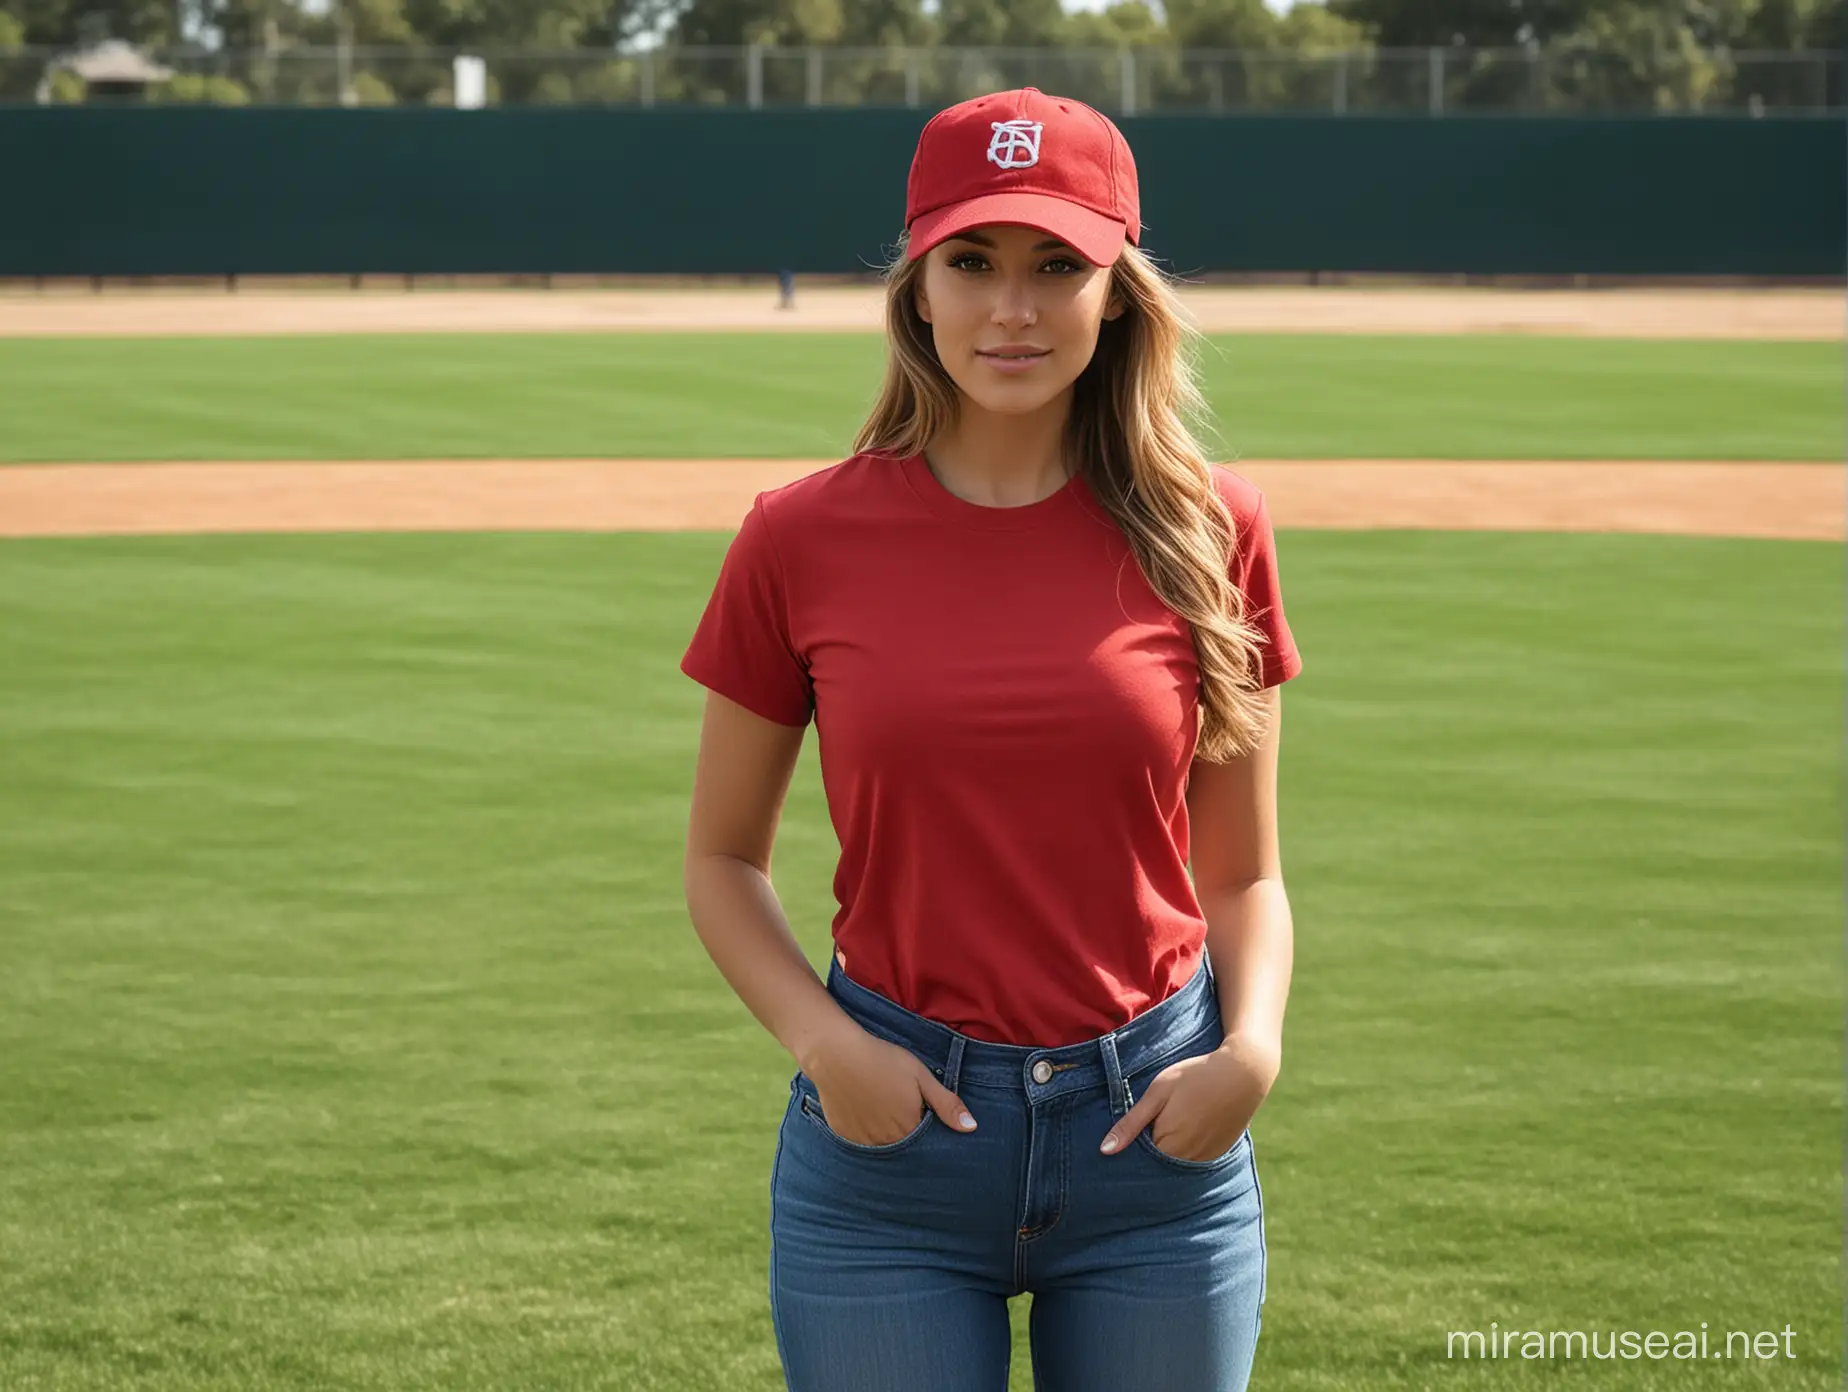 Beautiful Woman in Red TShirt and Baseball Cap on Baseball Field